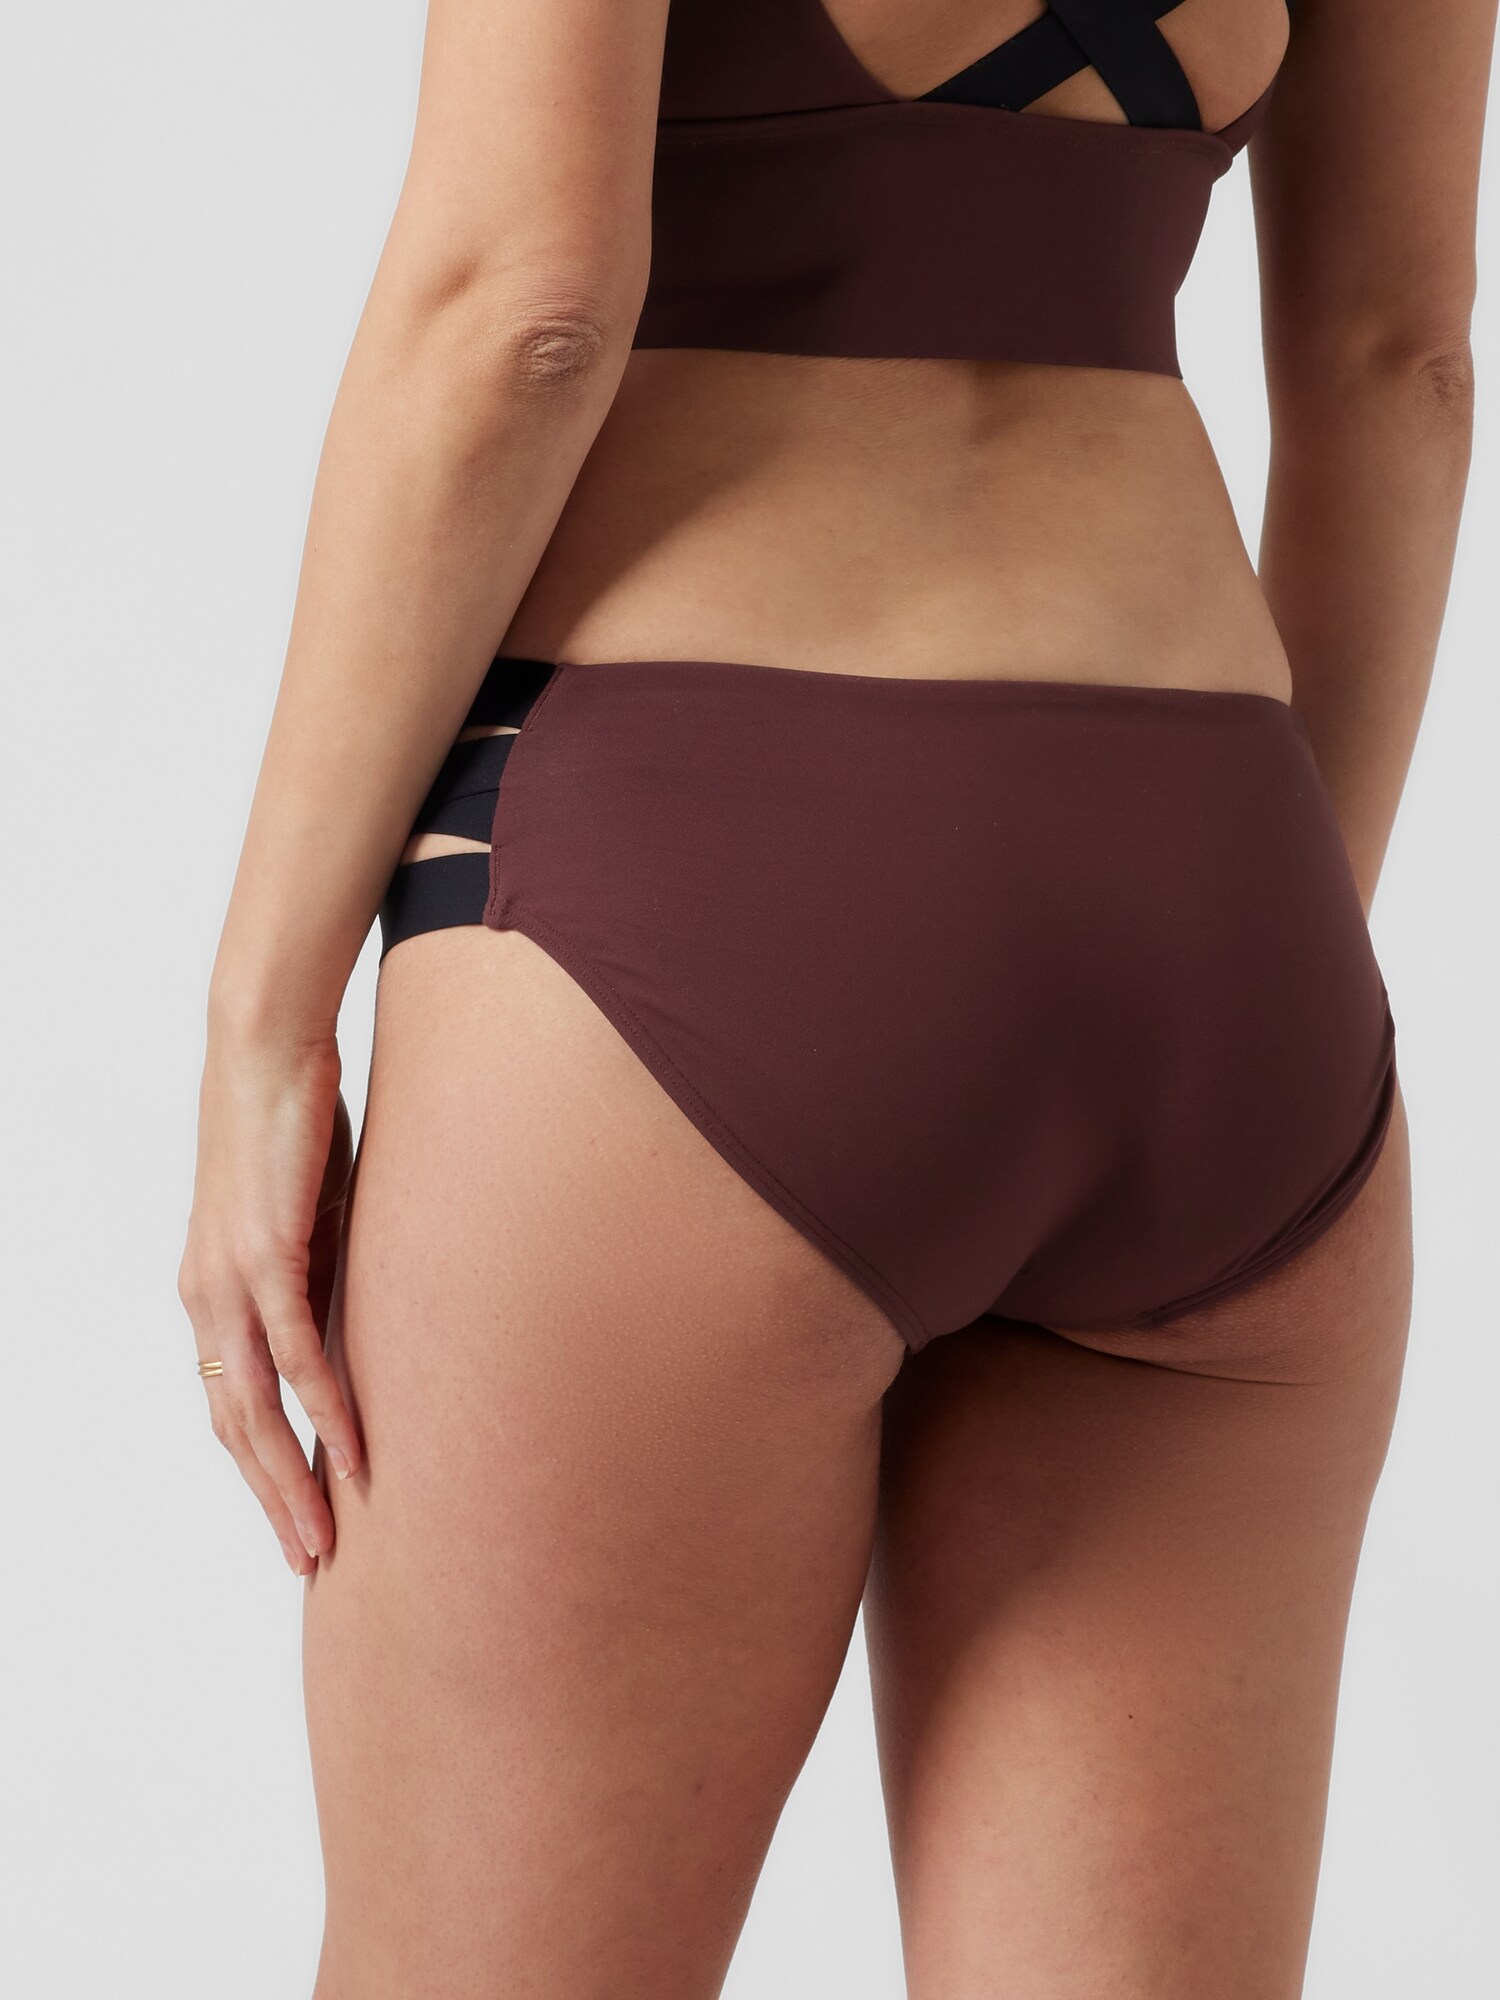 Buy Athleta Boyshort Bikini Bottoms from the Gap online shop